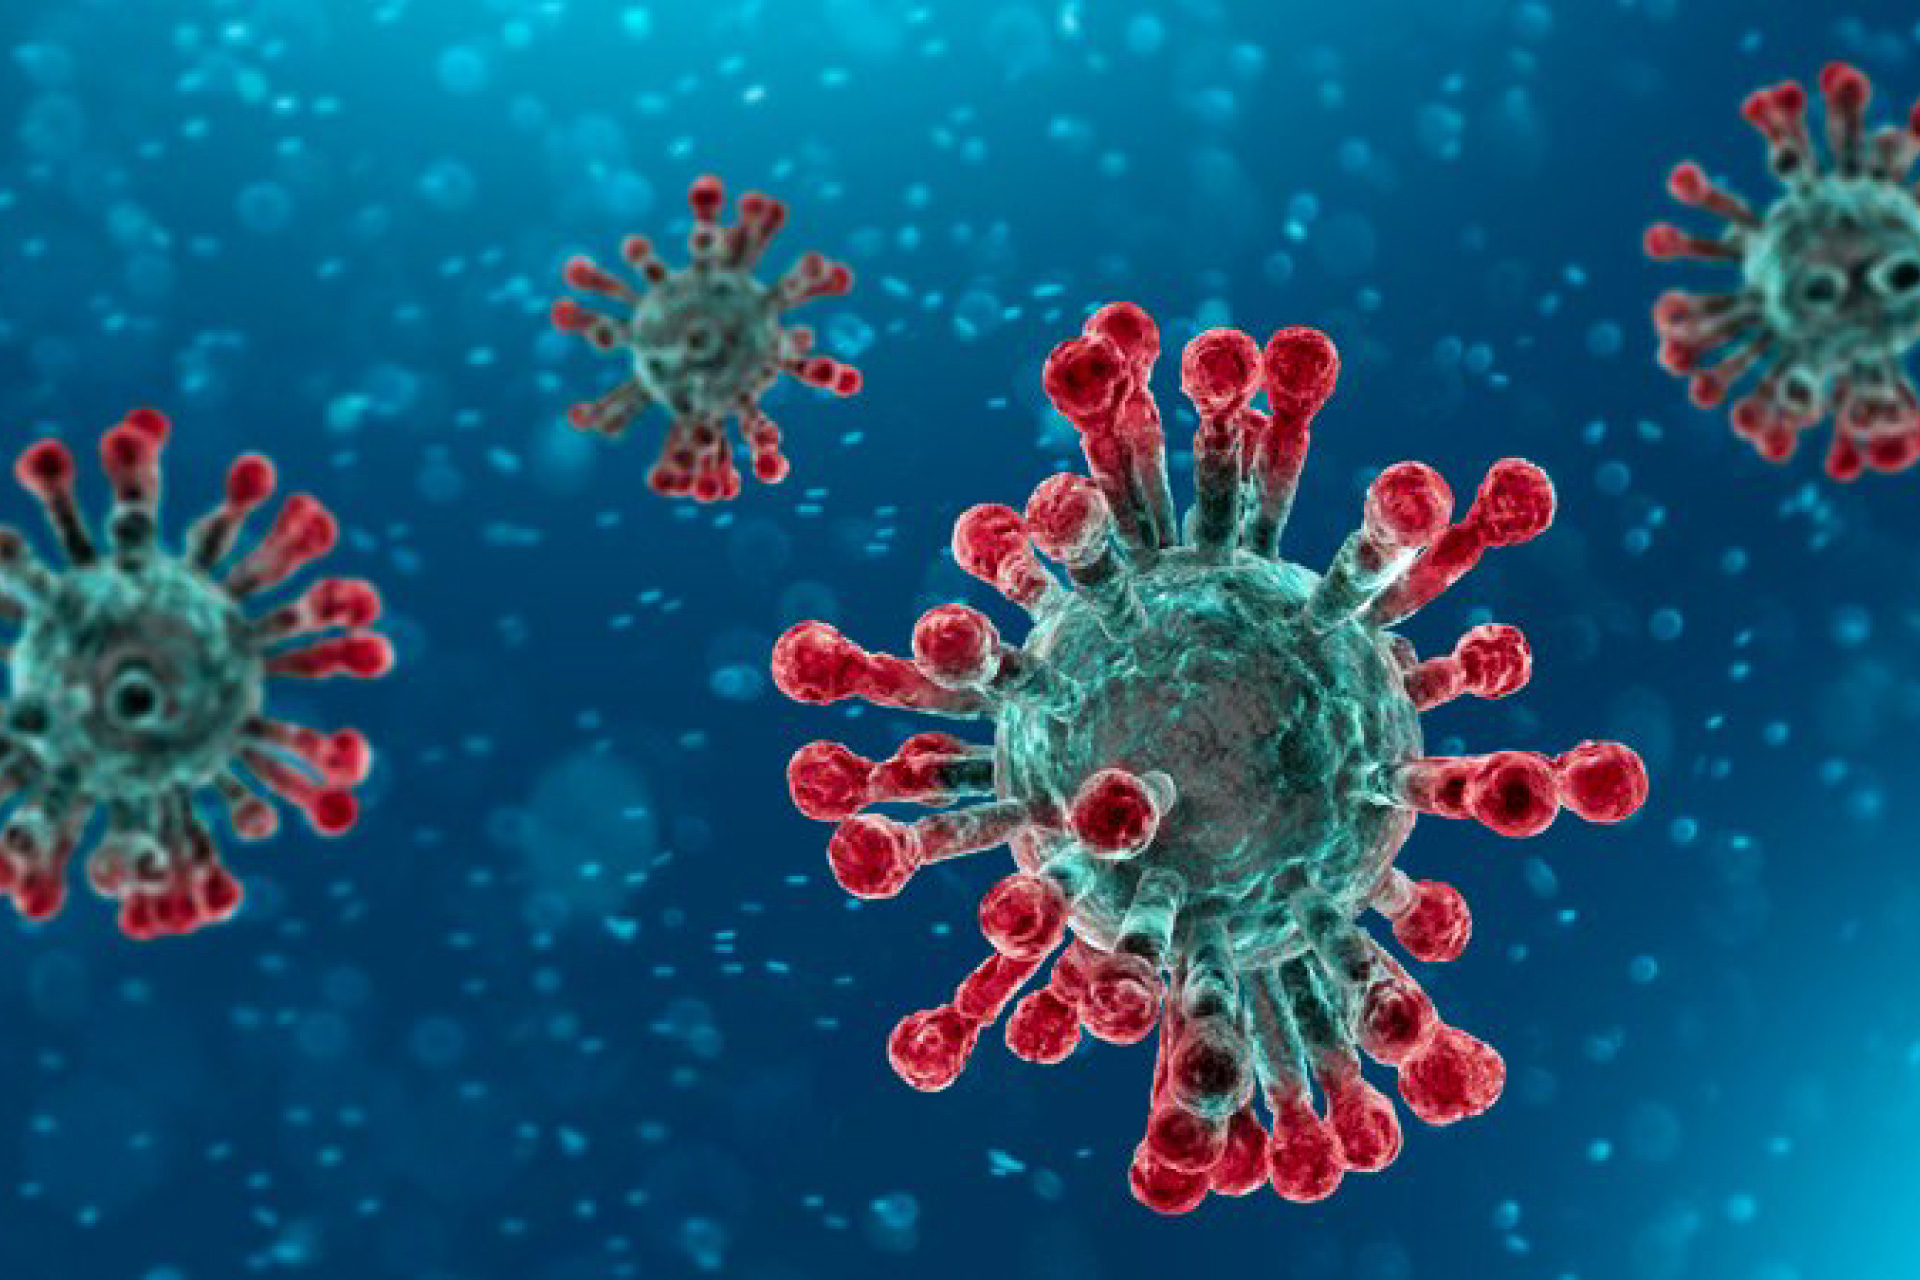 Coronavirus, a micro-organism stops an economic superpower